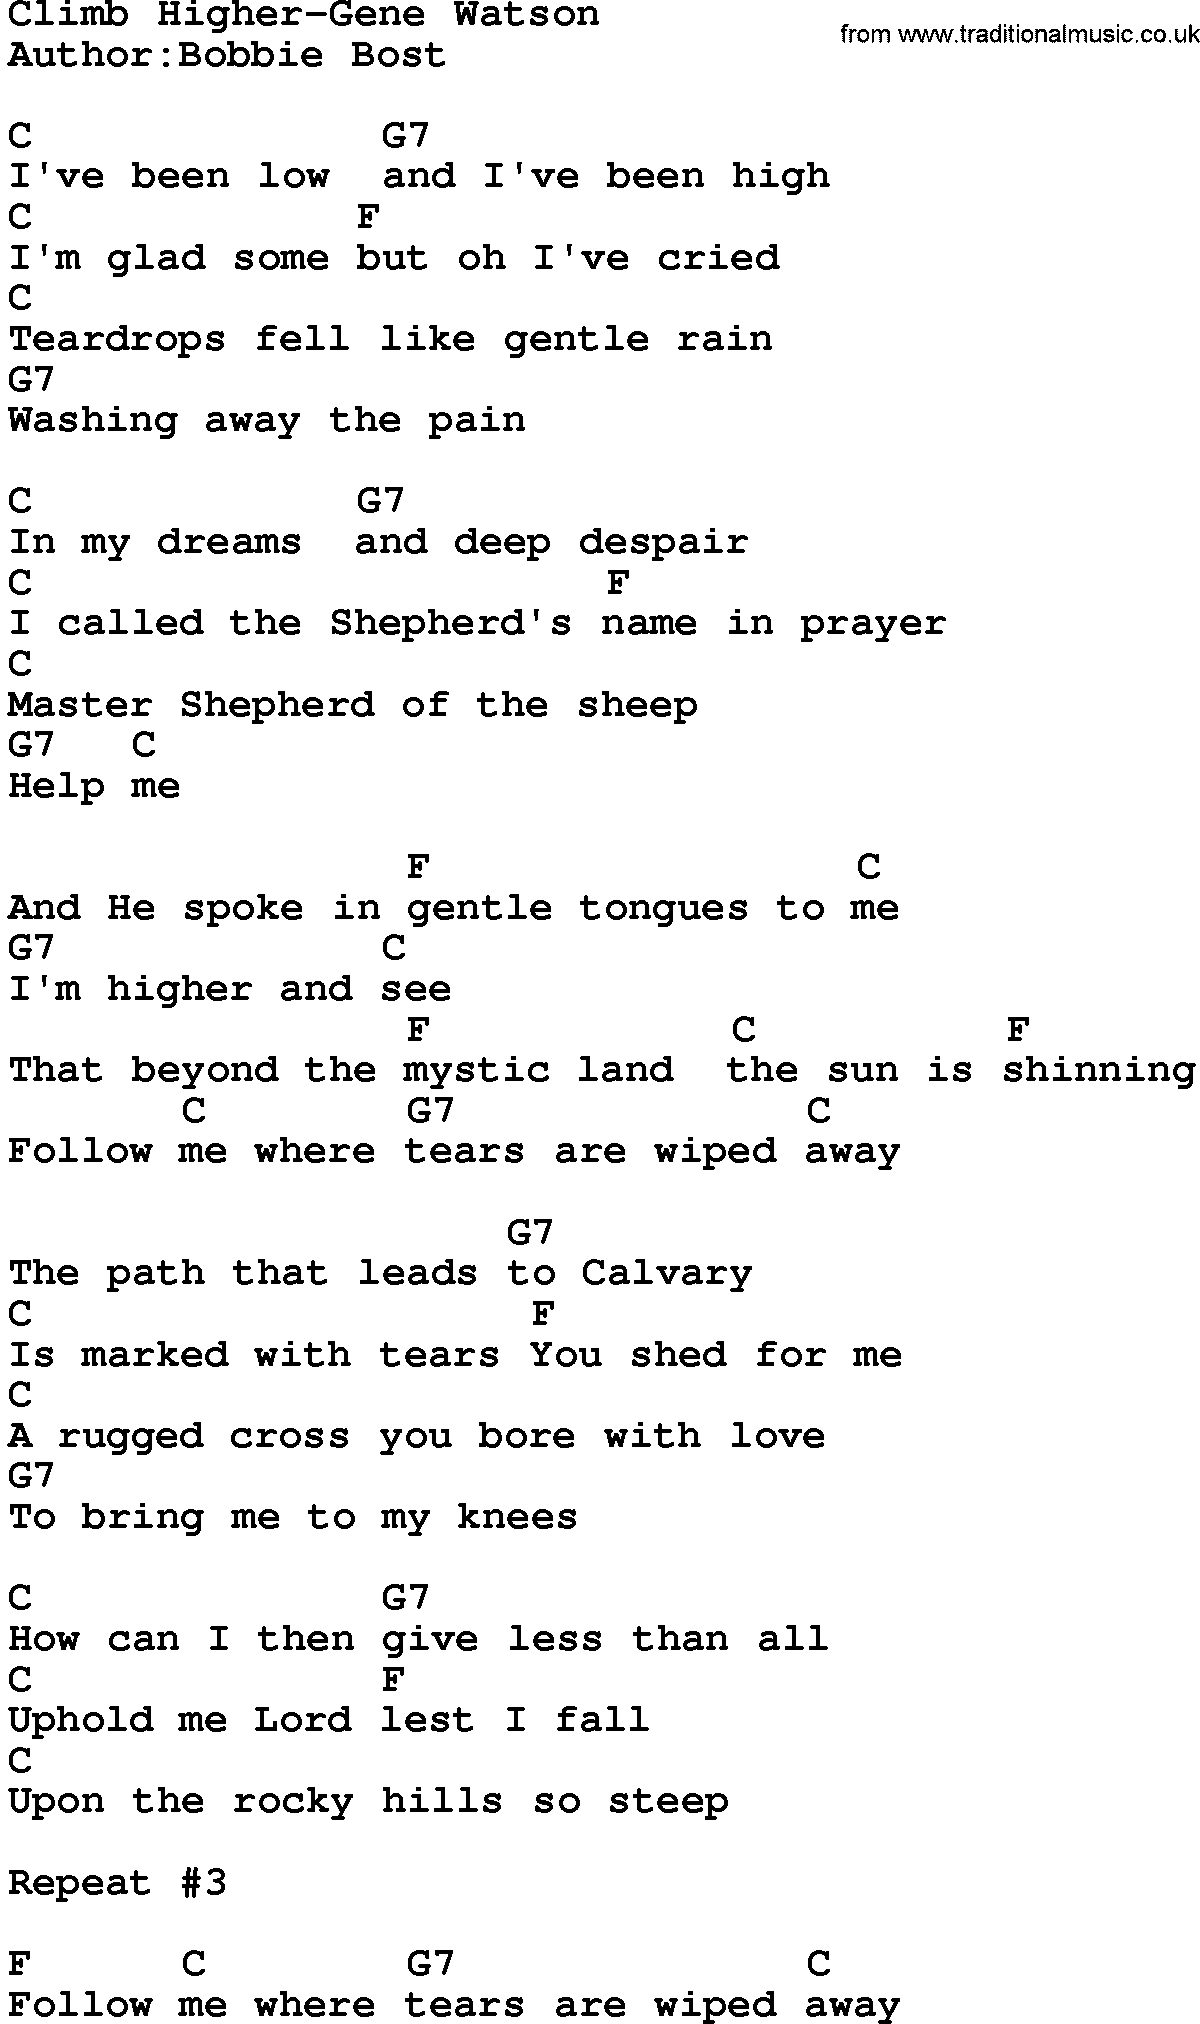 Country music song: Climb Higher-Gene Watson lyrics and chords